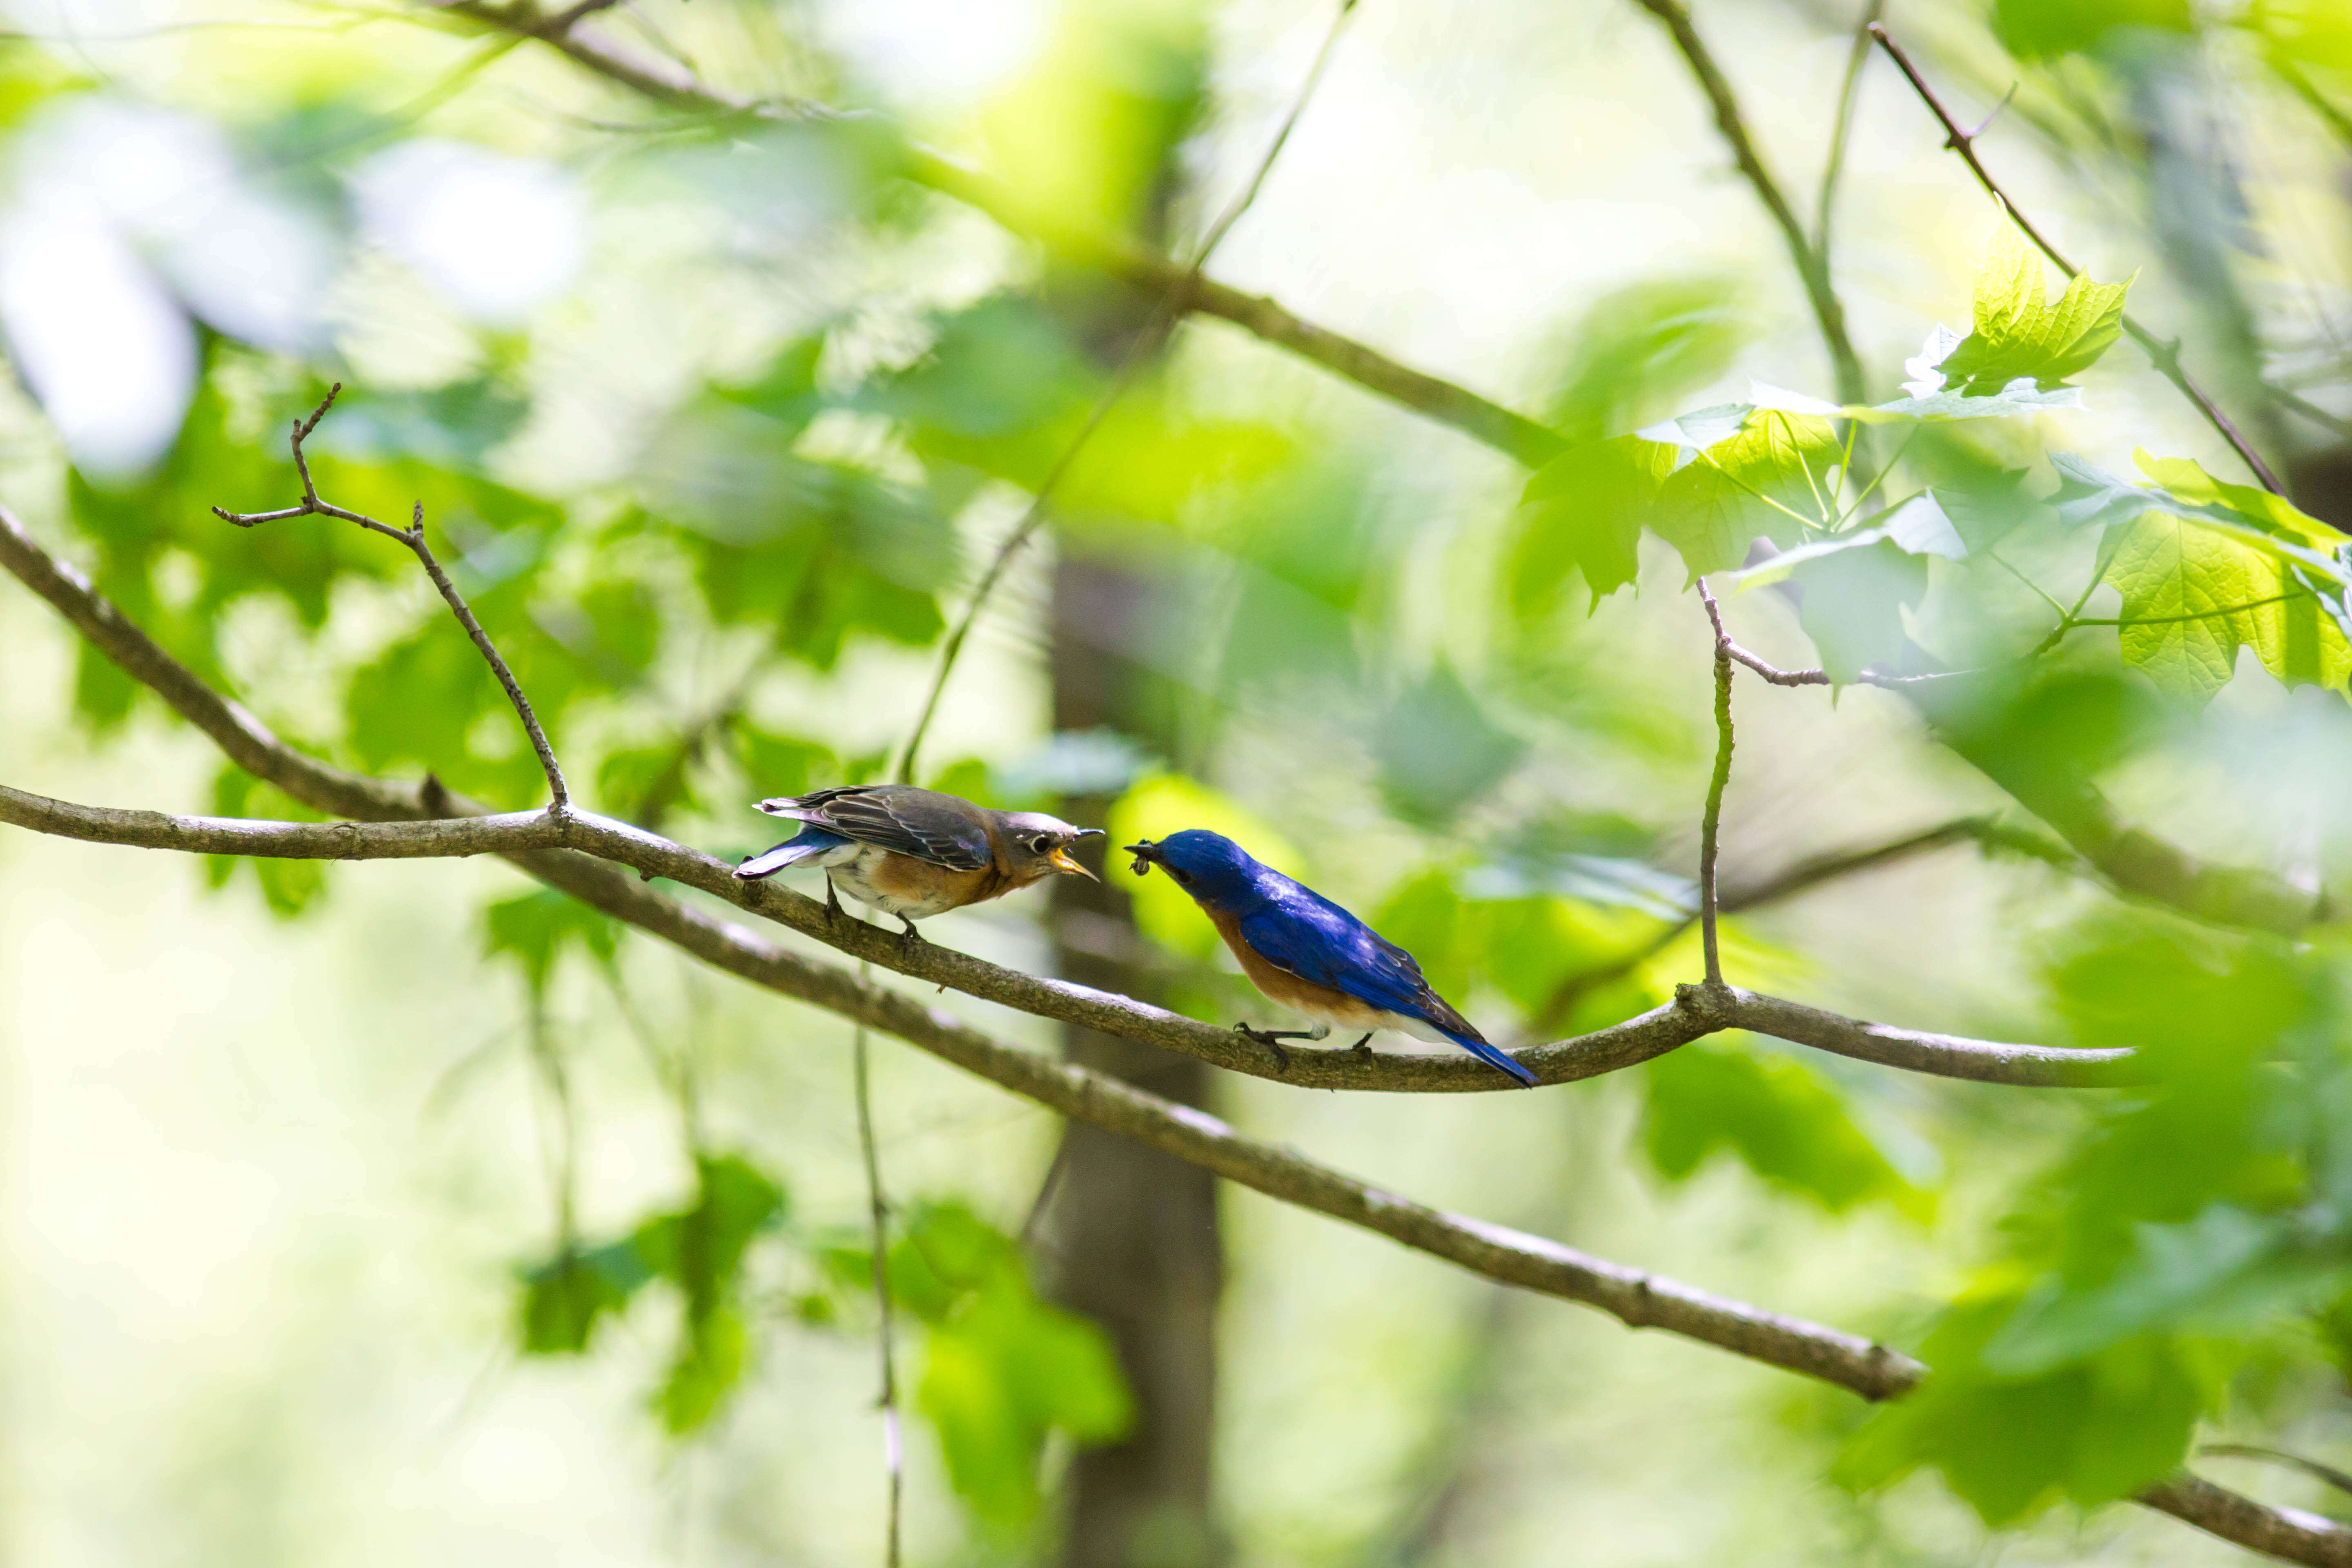 Image of Eastern Bluebird